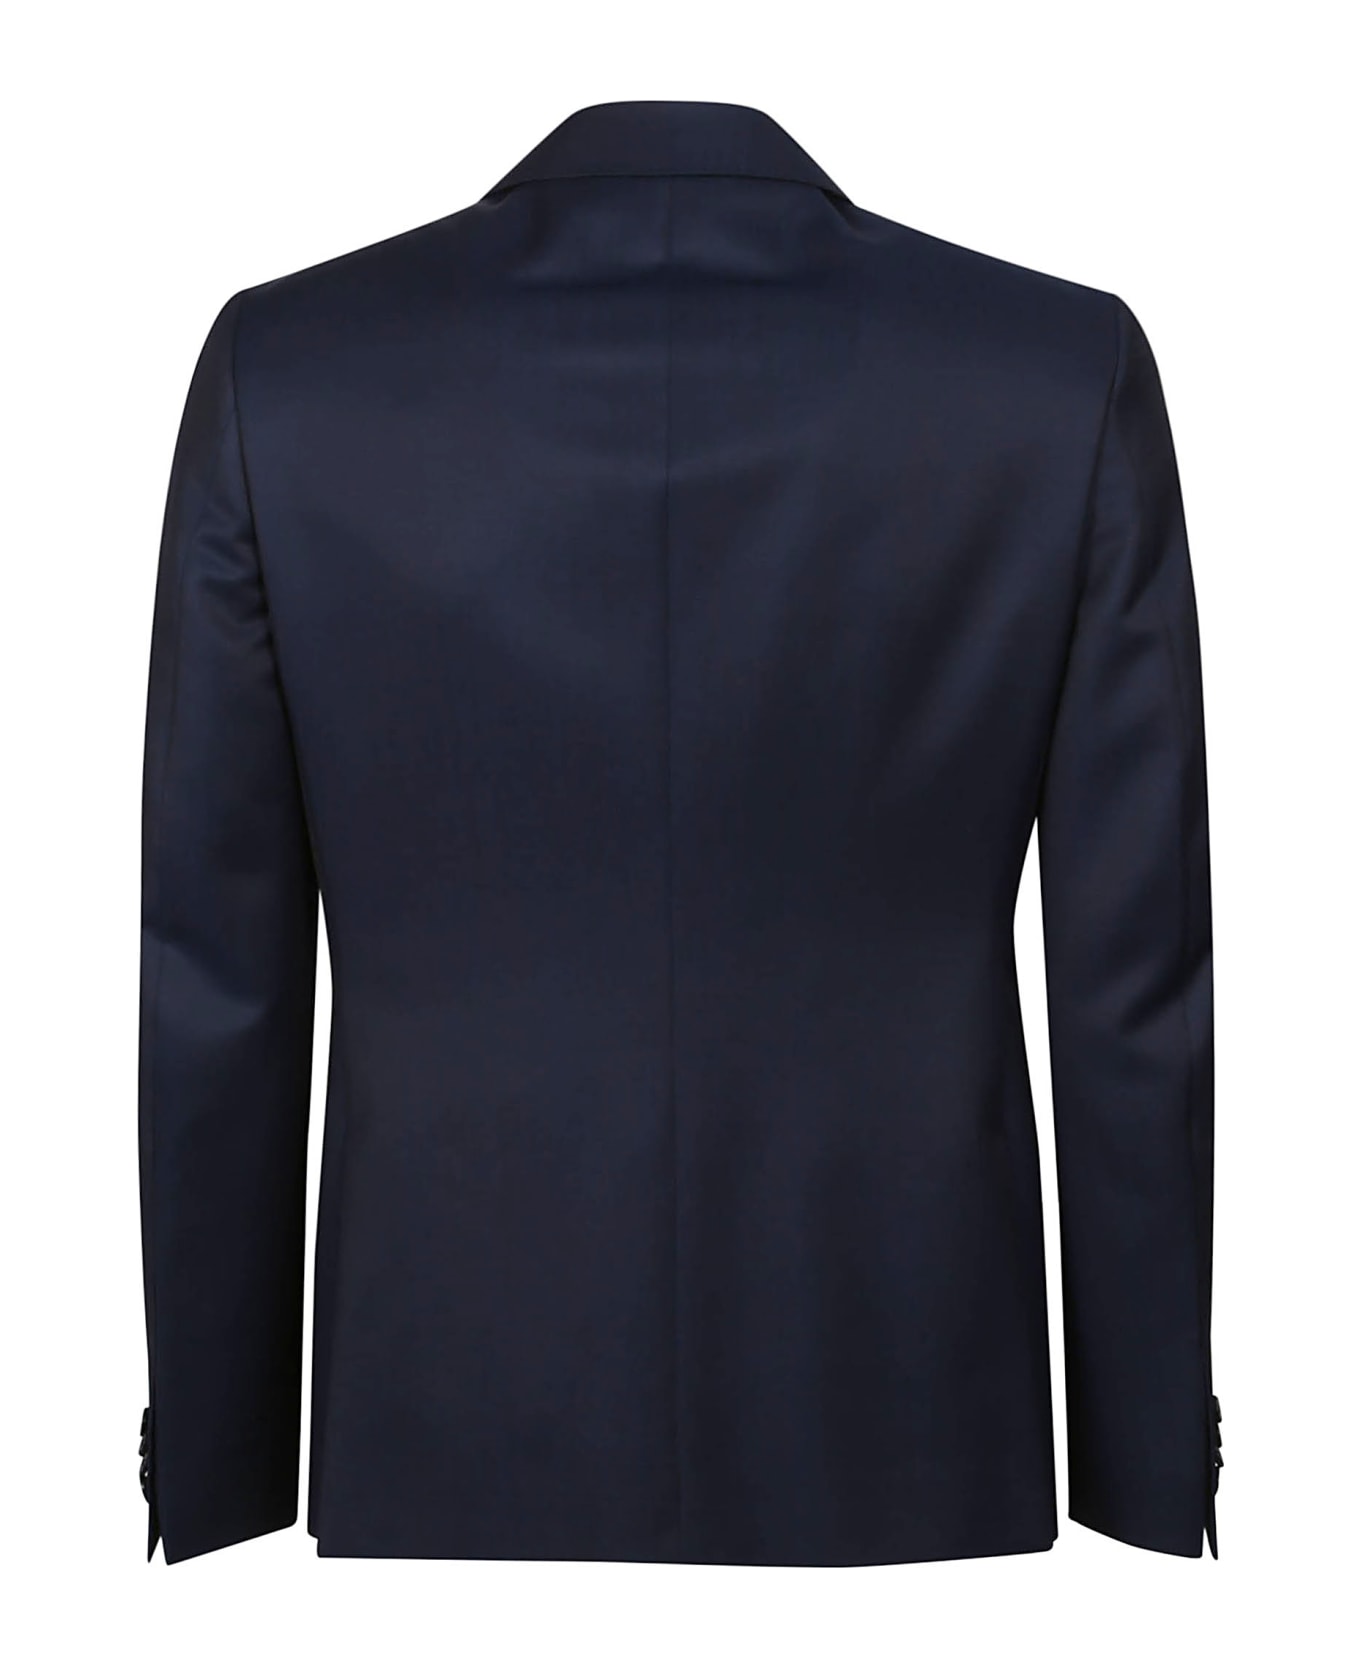 Zegna Lux Tailoring Suit - Blu スーツ